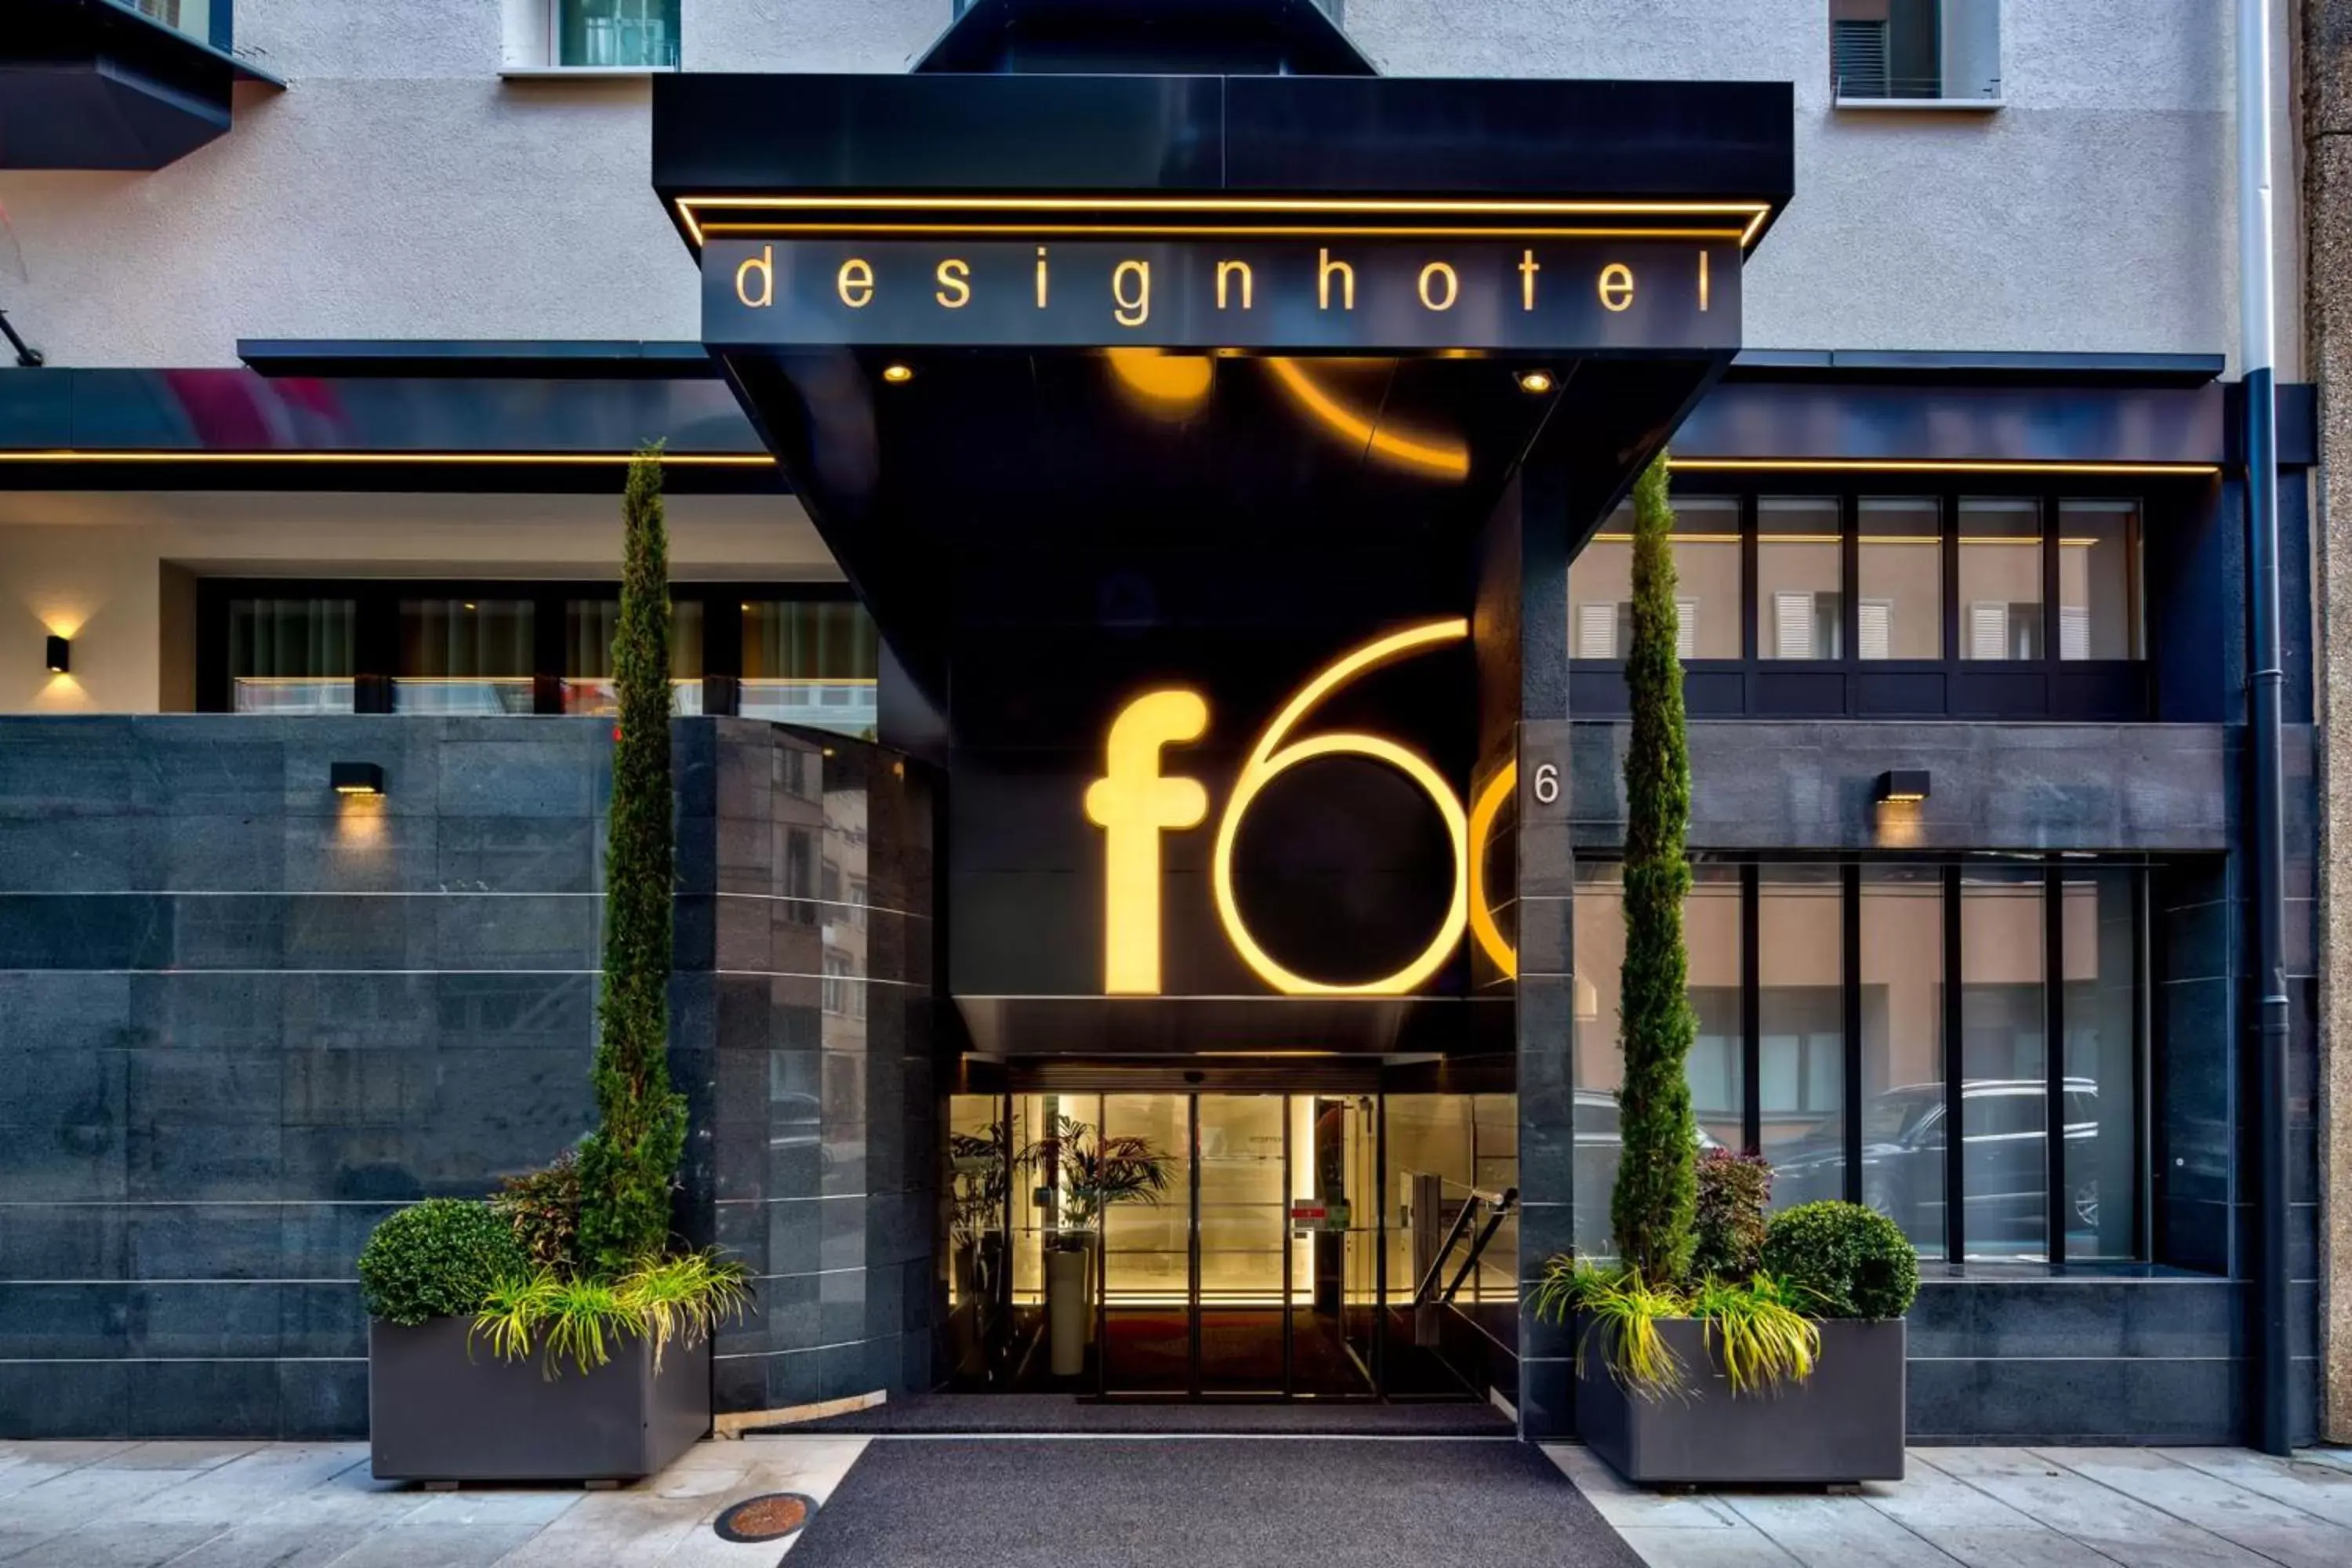 Facade/entrance in Design Hotel f6